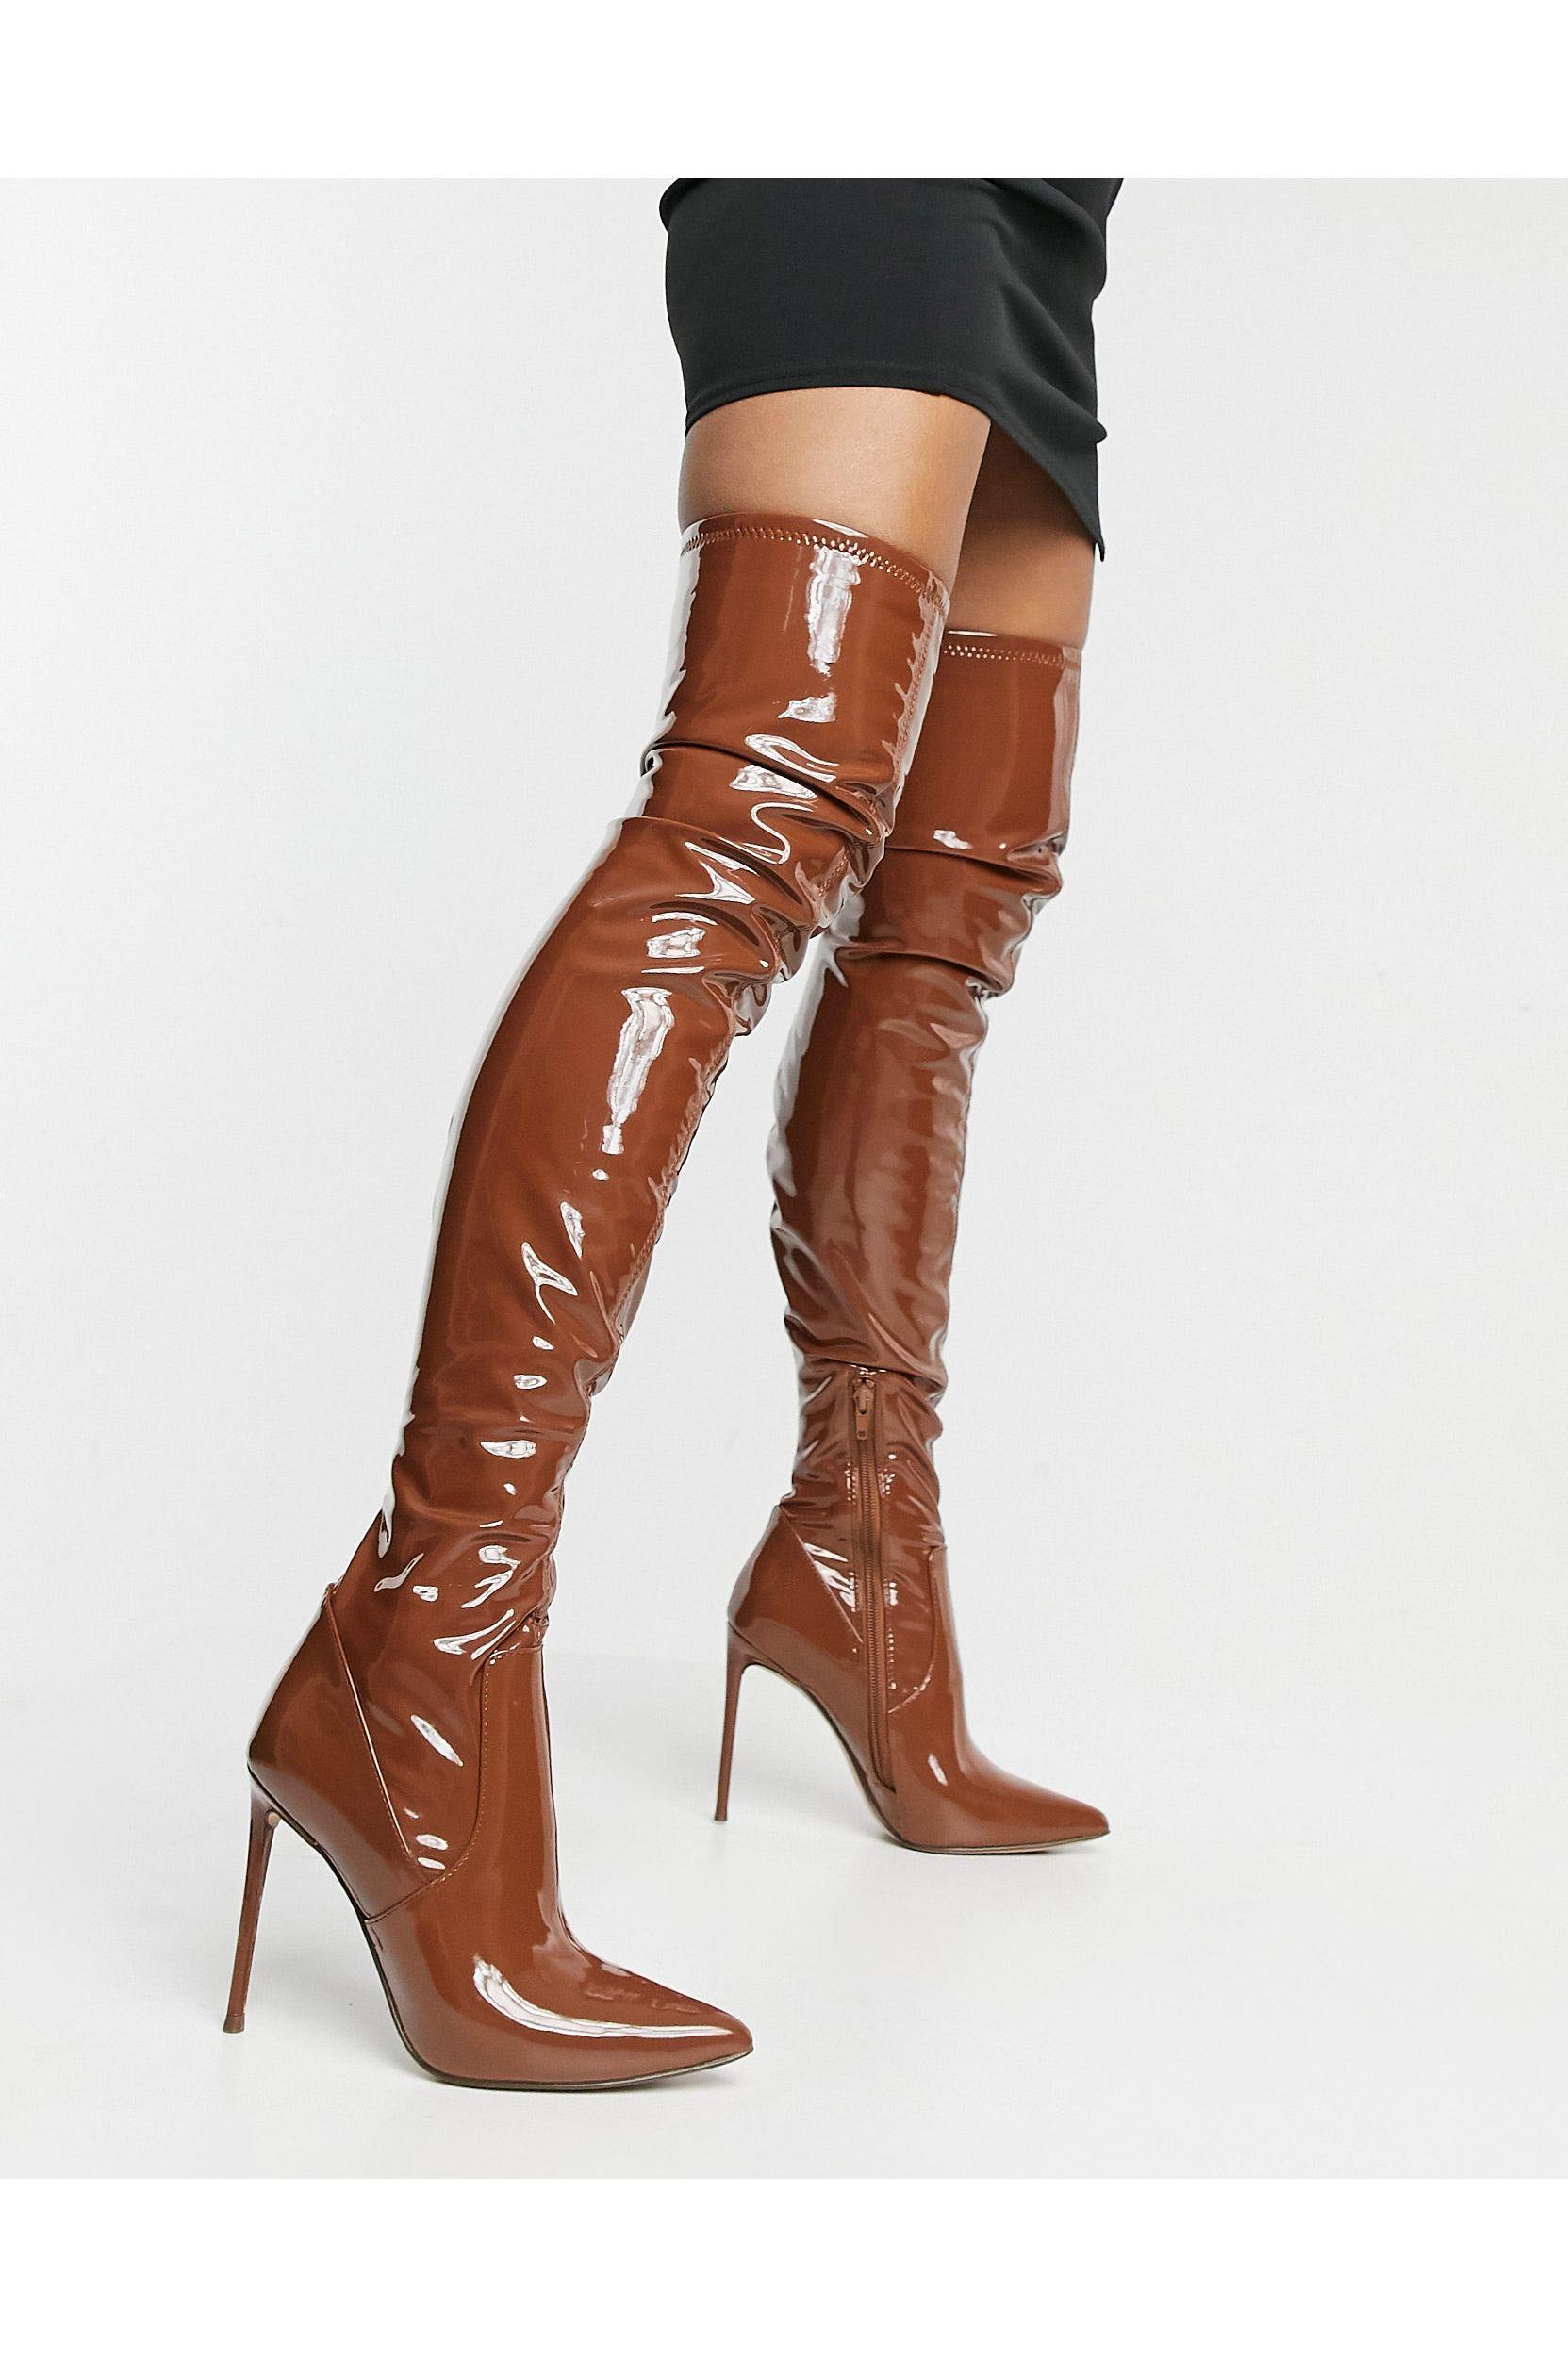 Thigh High Boots Steve Madden Hot Sale, Save 61% | jlcatj.gob.mx